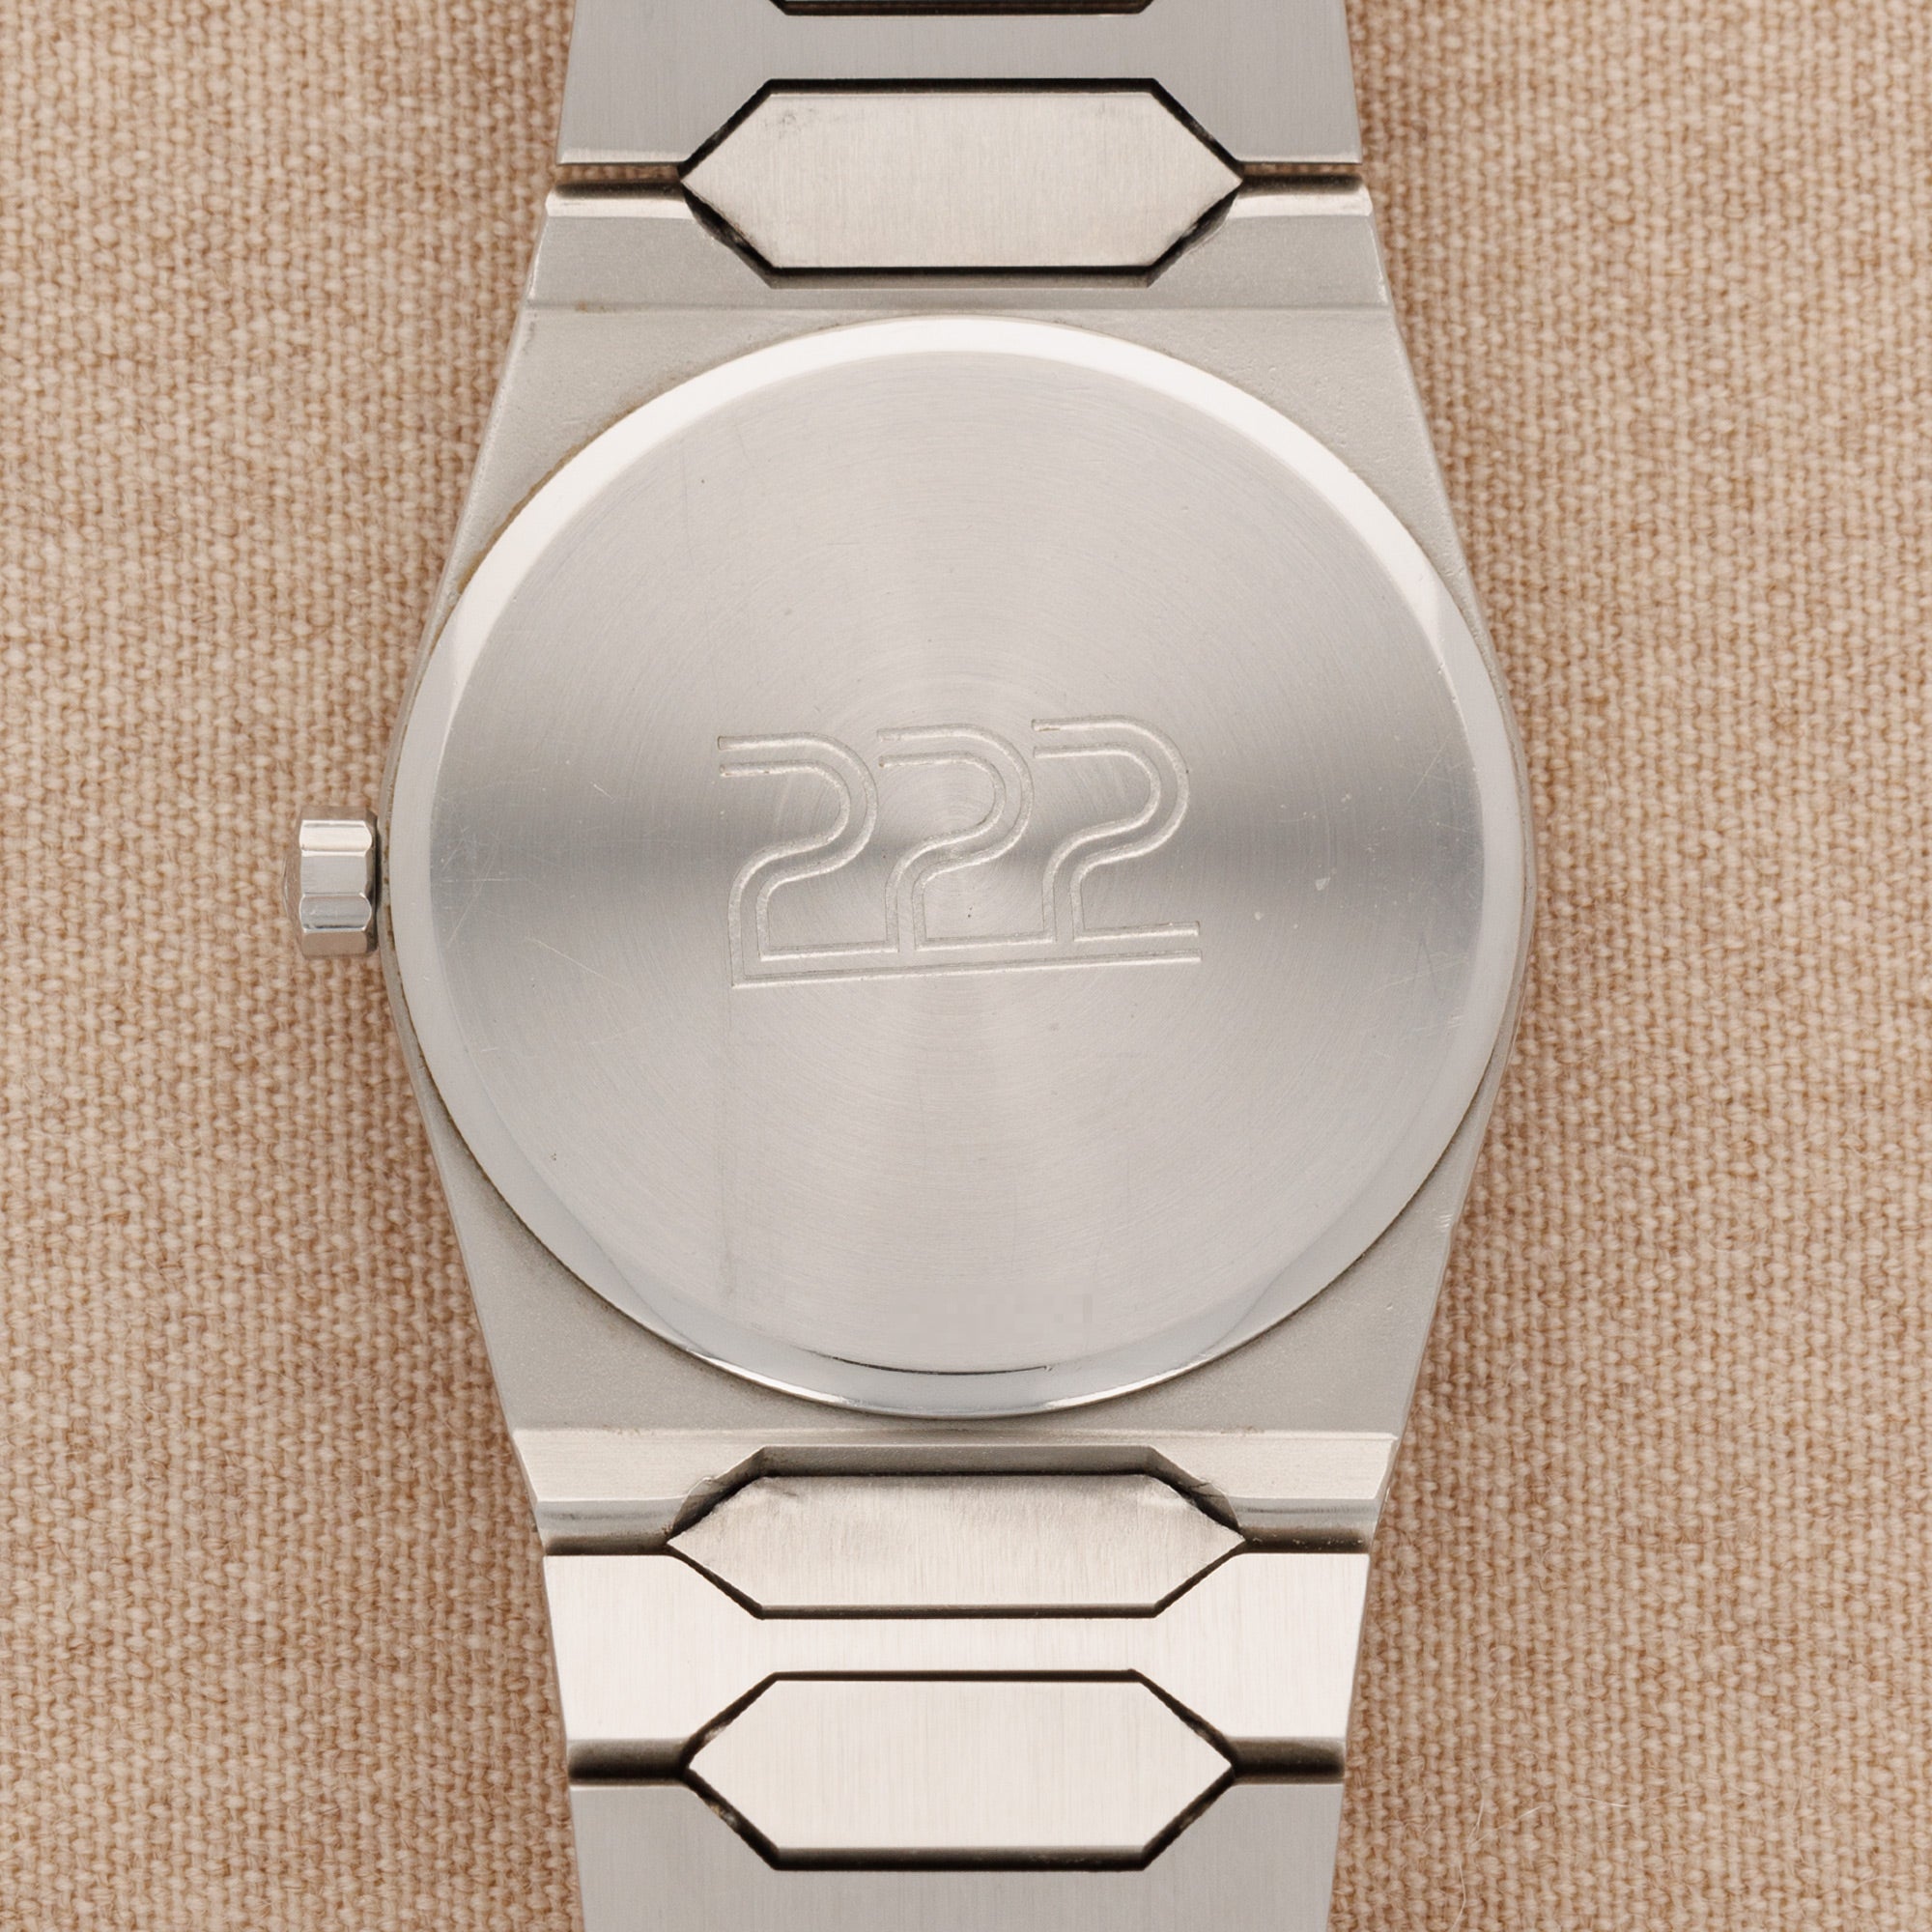 Vacheron Constantin - Vacheron Constantin Steel 222 Ref 44018 - The Keystone Watches